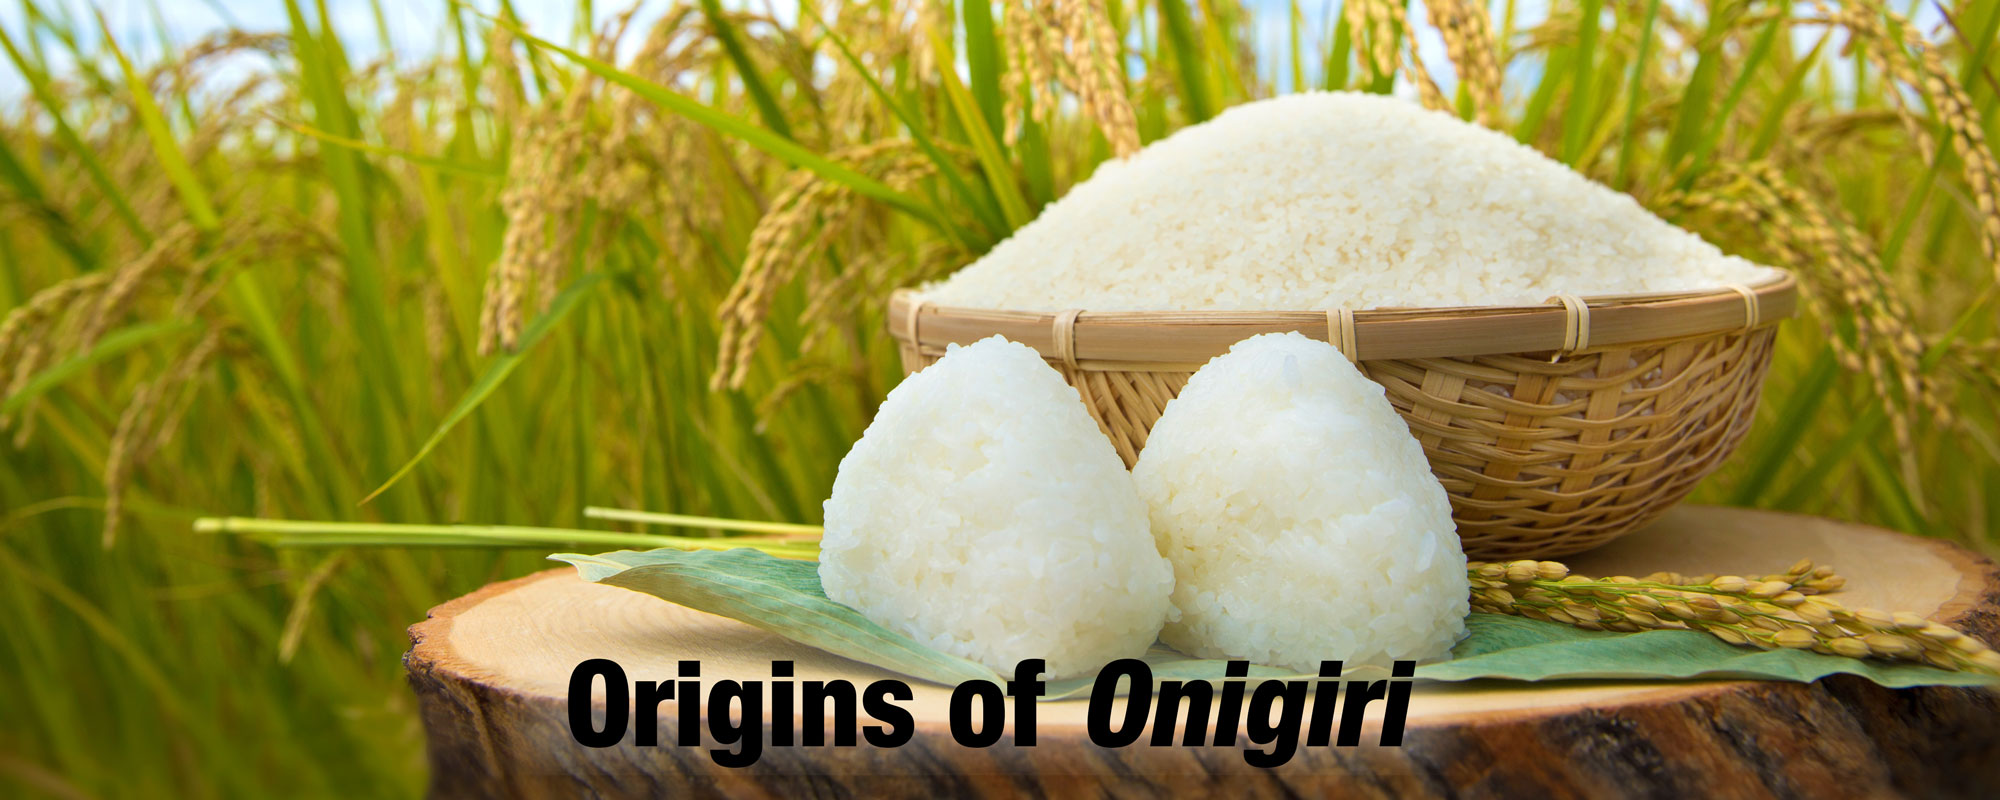 Origins of Onigiri